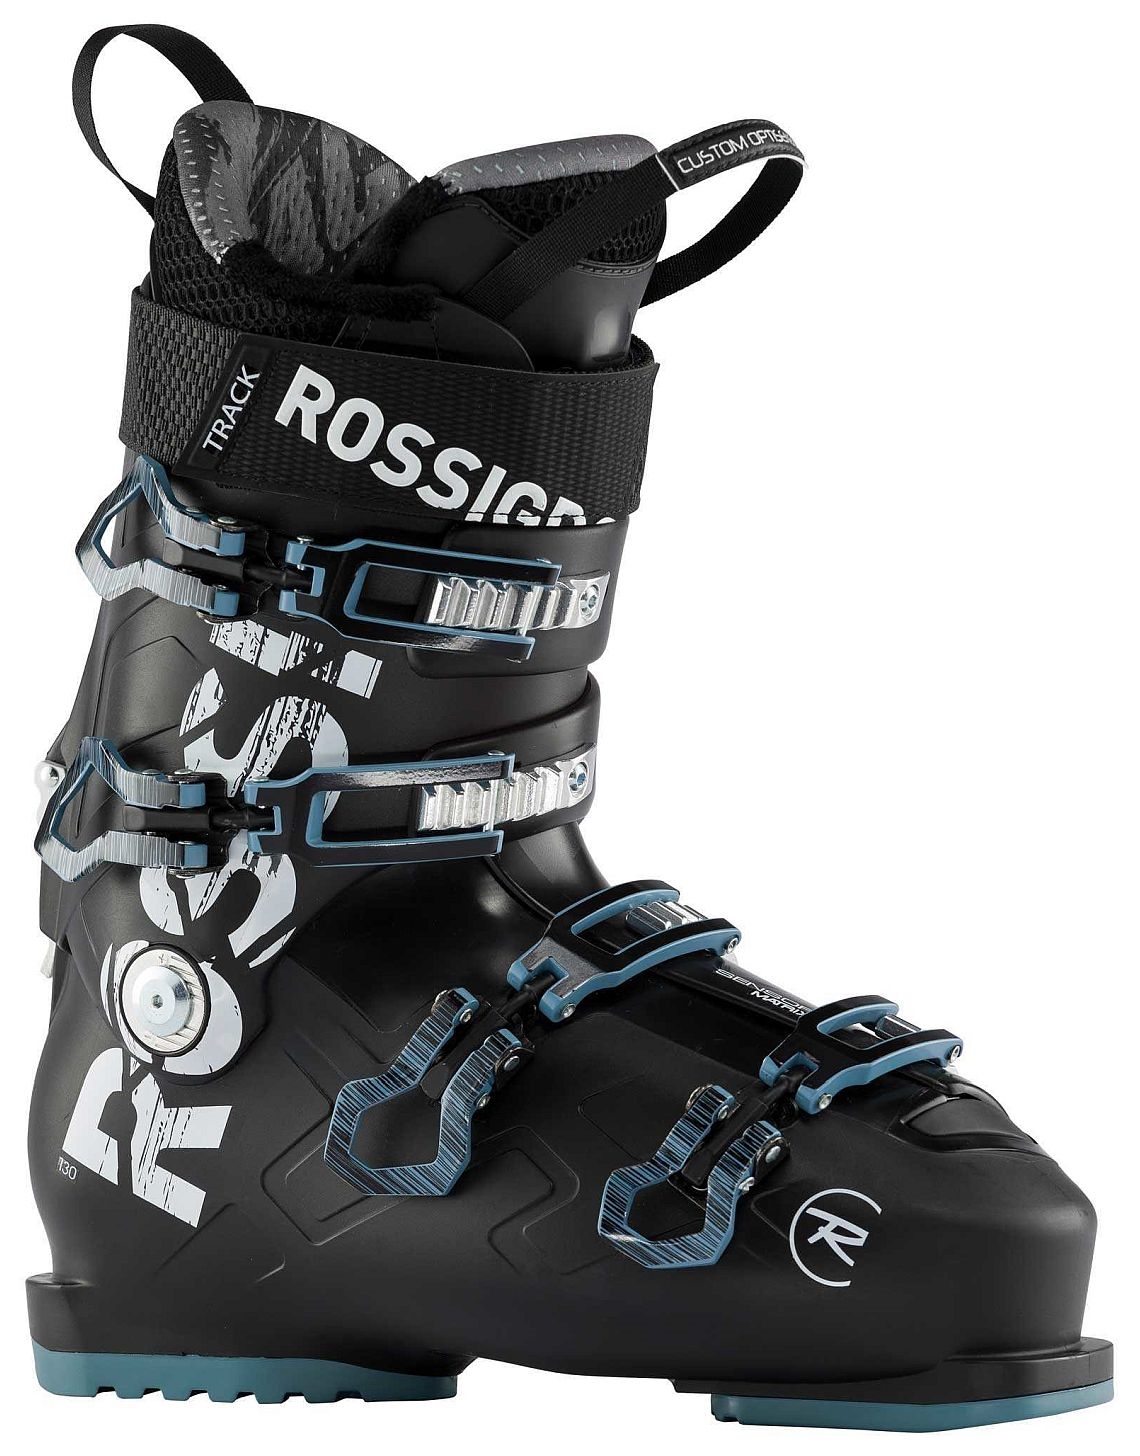 Rossignol buty narciarskie Track 130